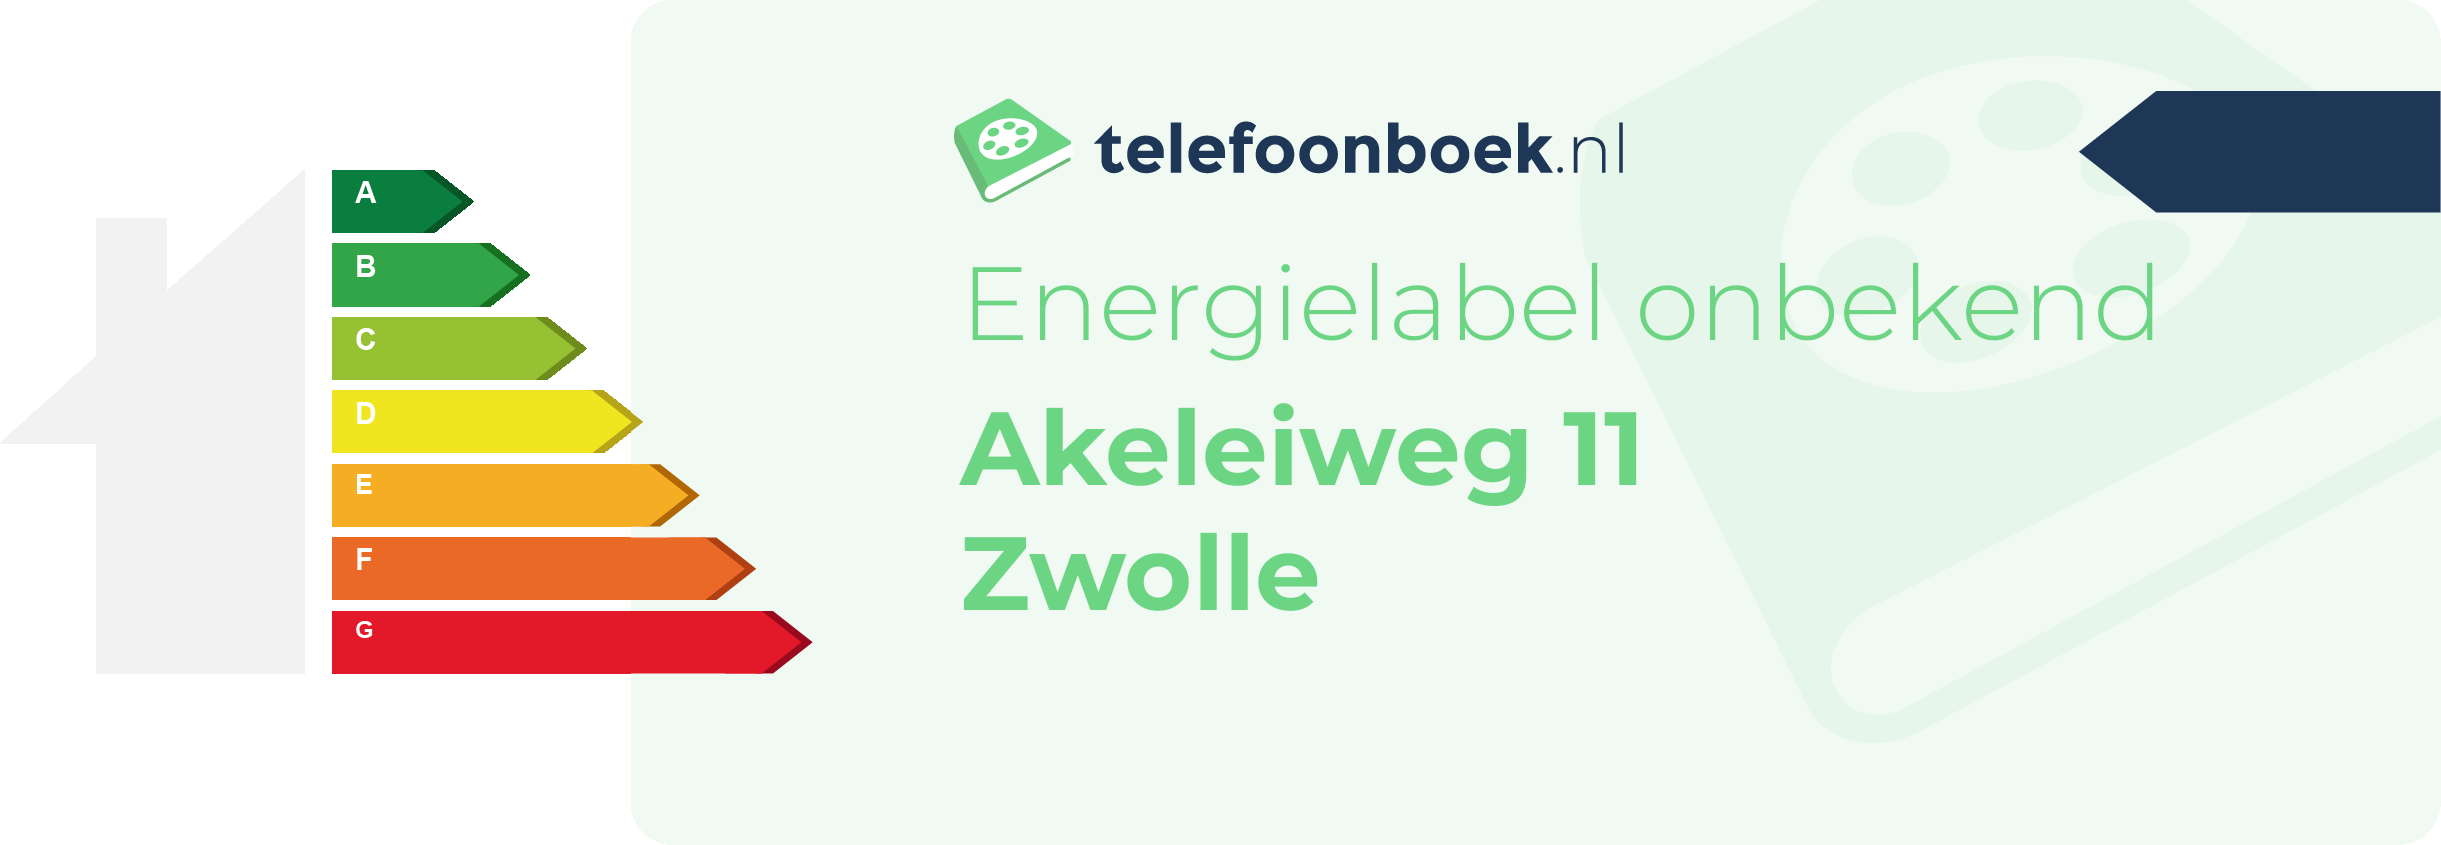 Energielabel Akeleiweg 11 Zwolle